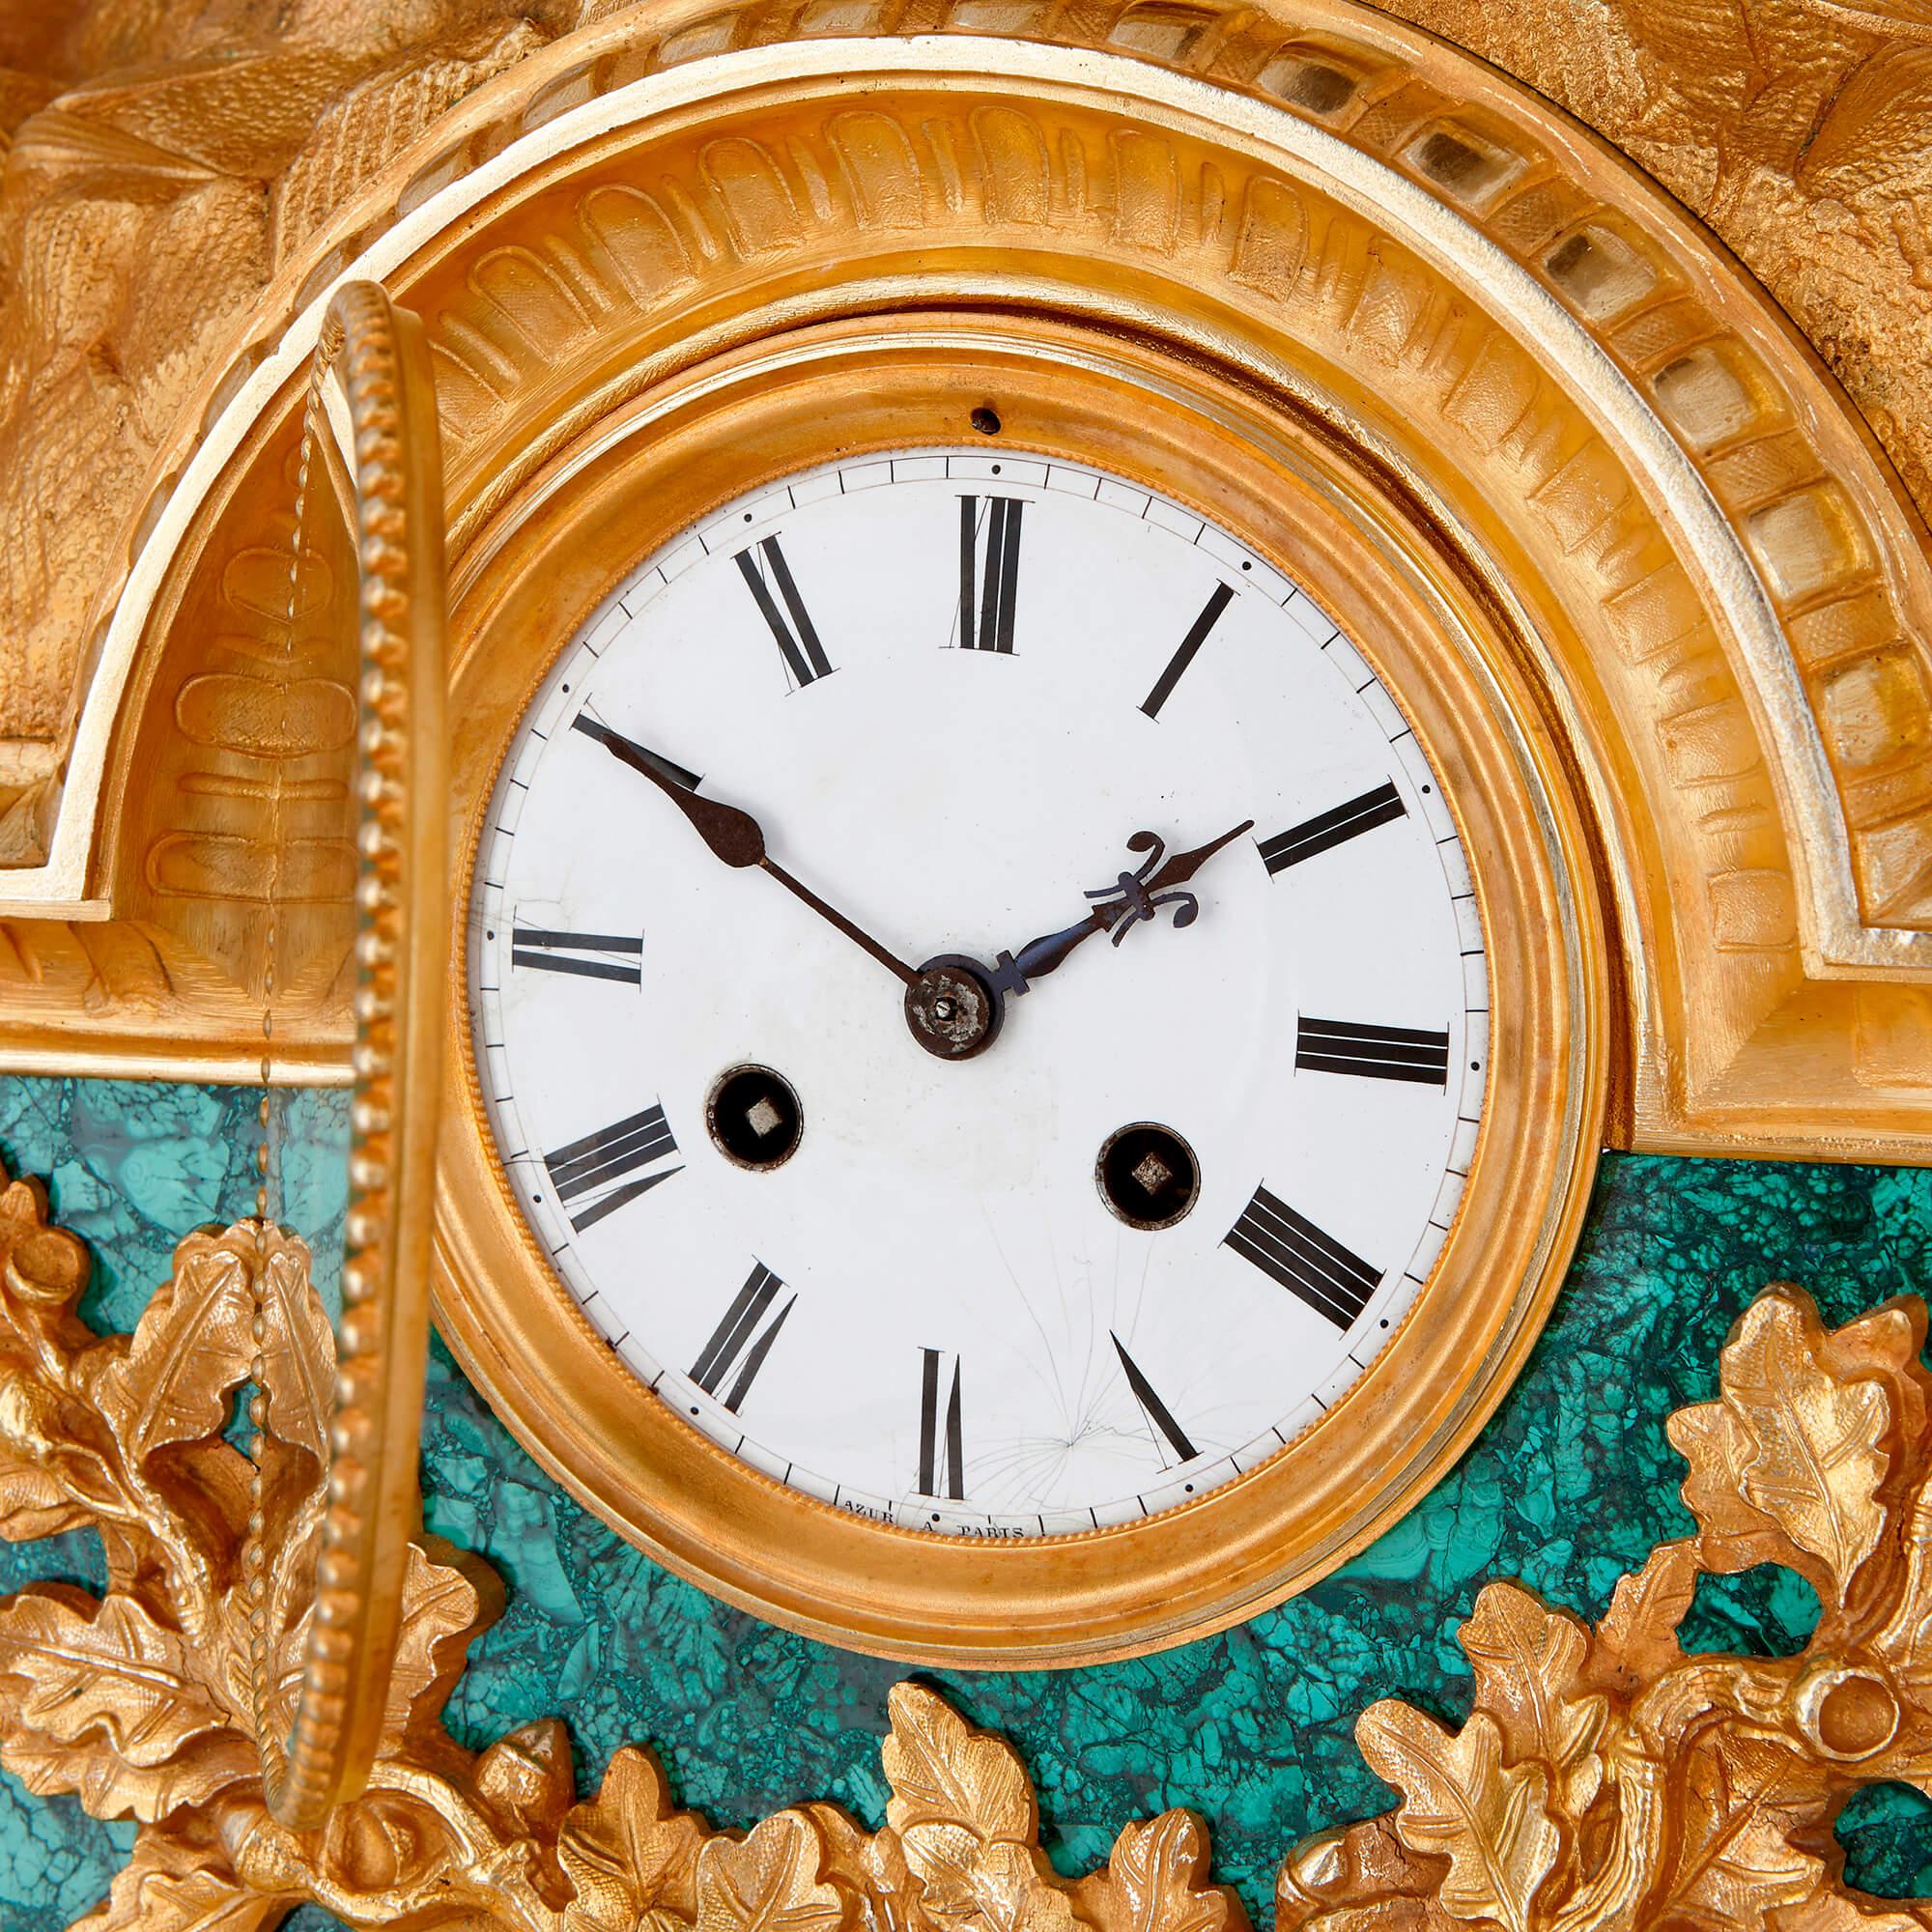 Baroque 19th Century French Gilt Bronze and Malachite Mantel Clock